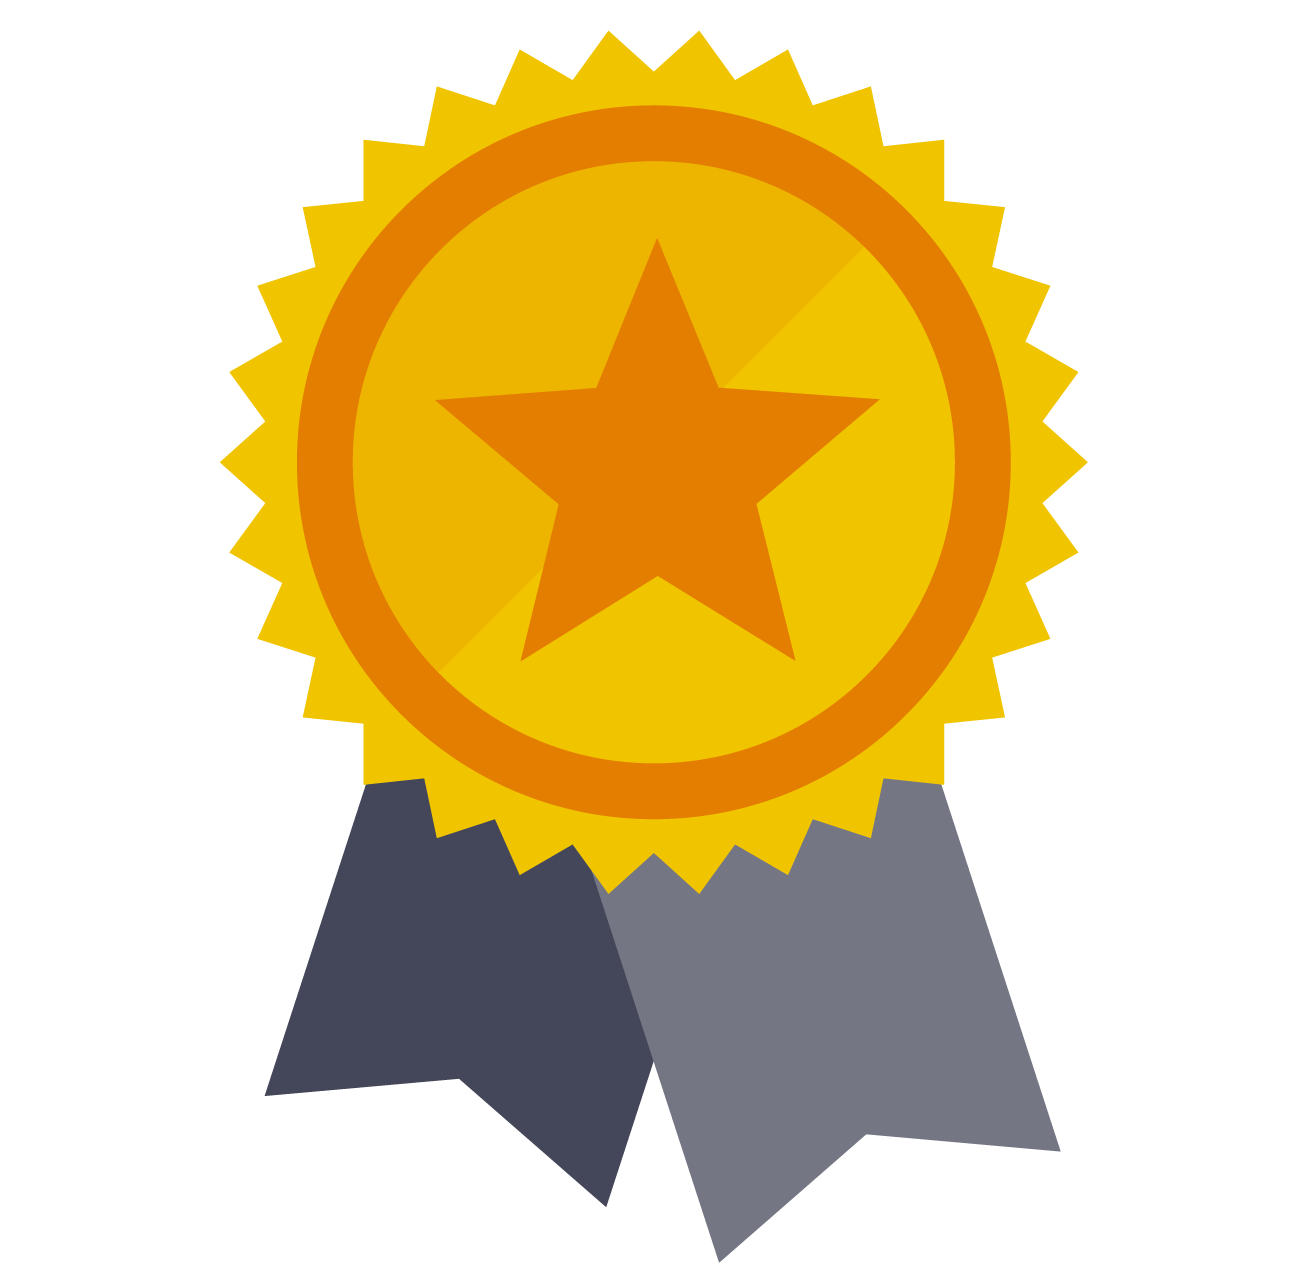 Award icons | Noun Project